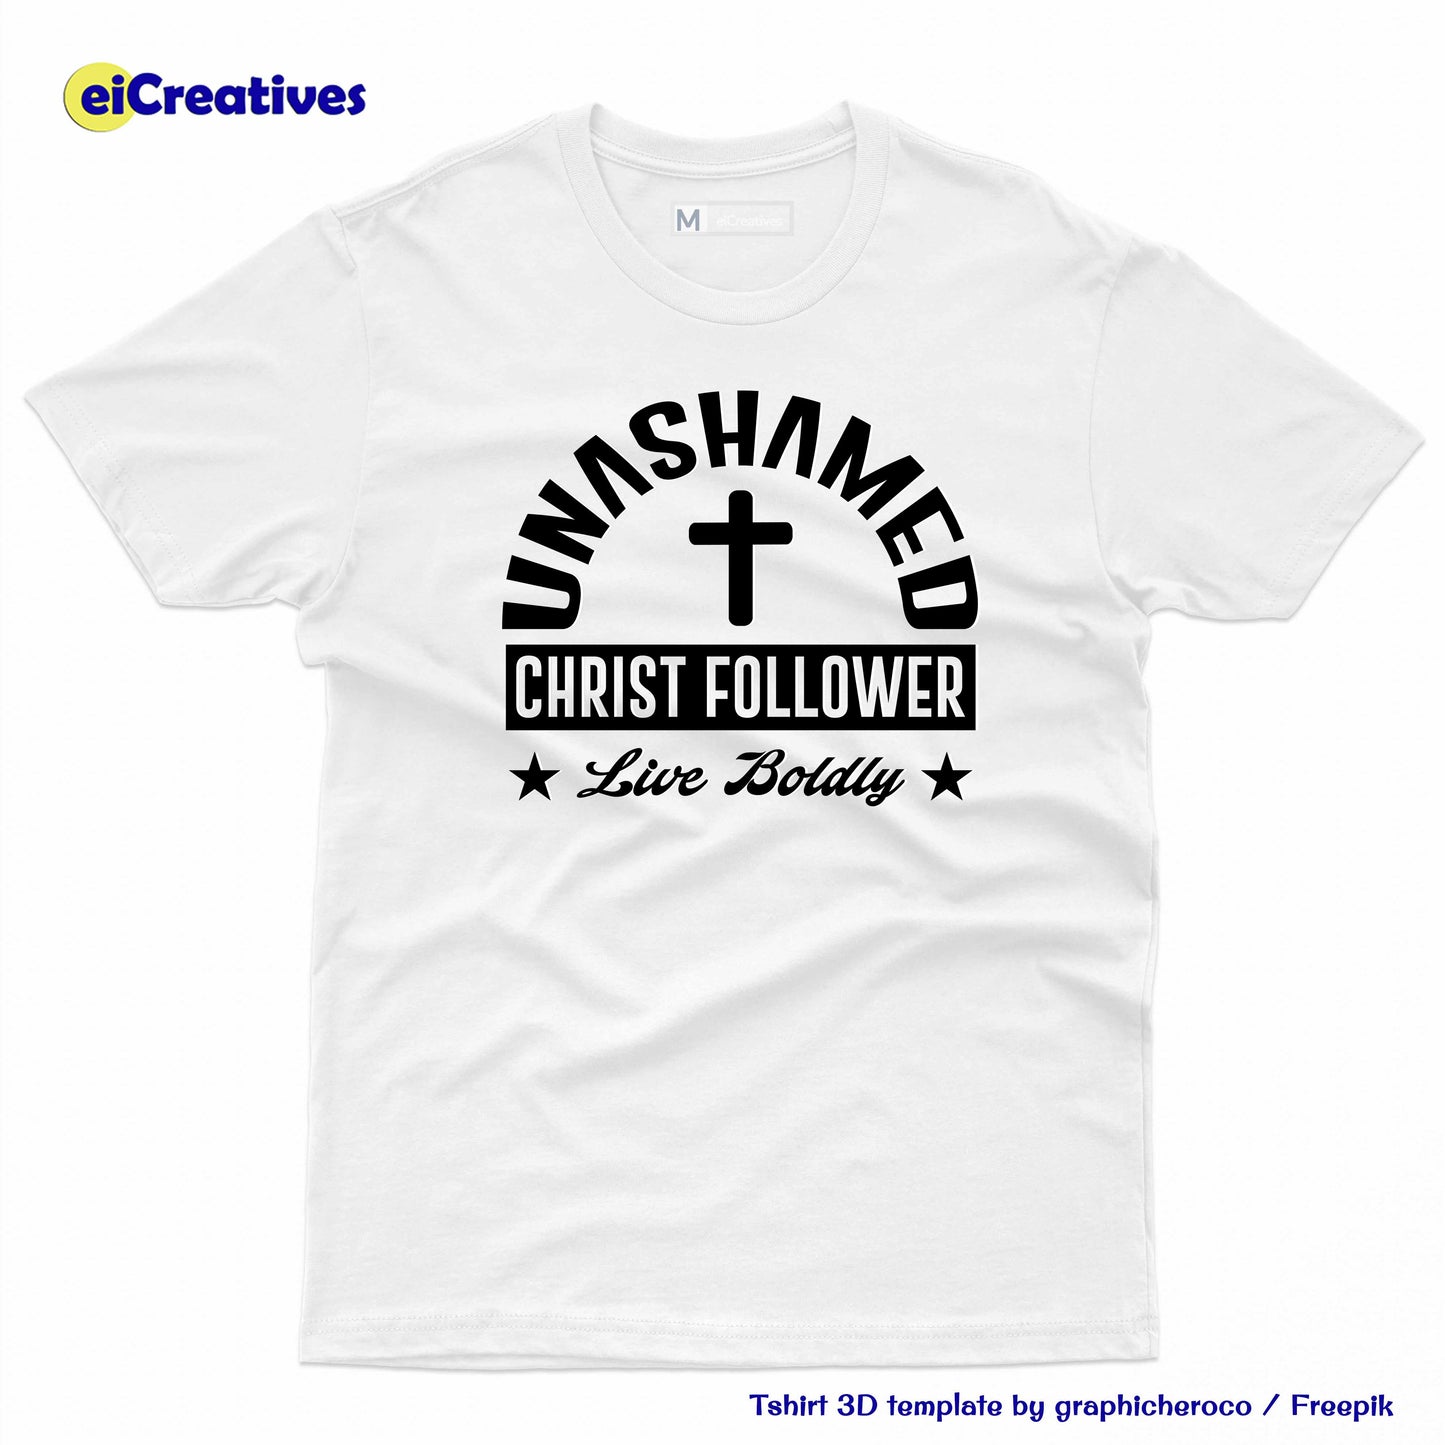 Unashamed Christ Follower - T-shirt